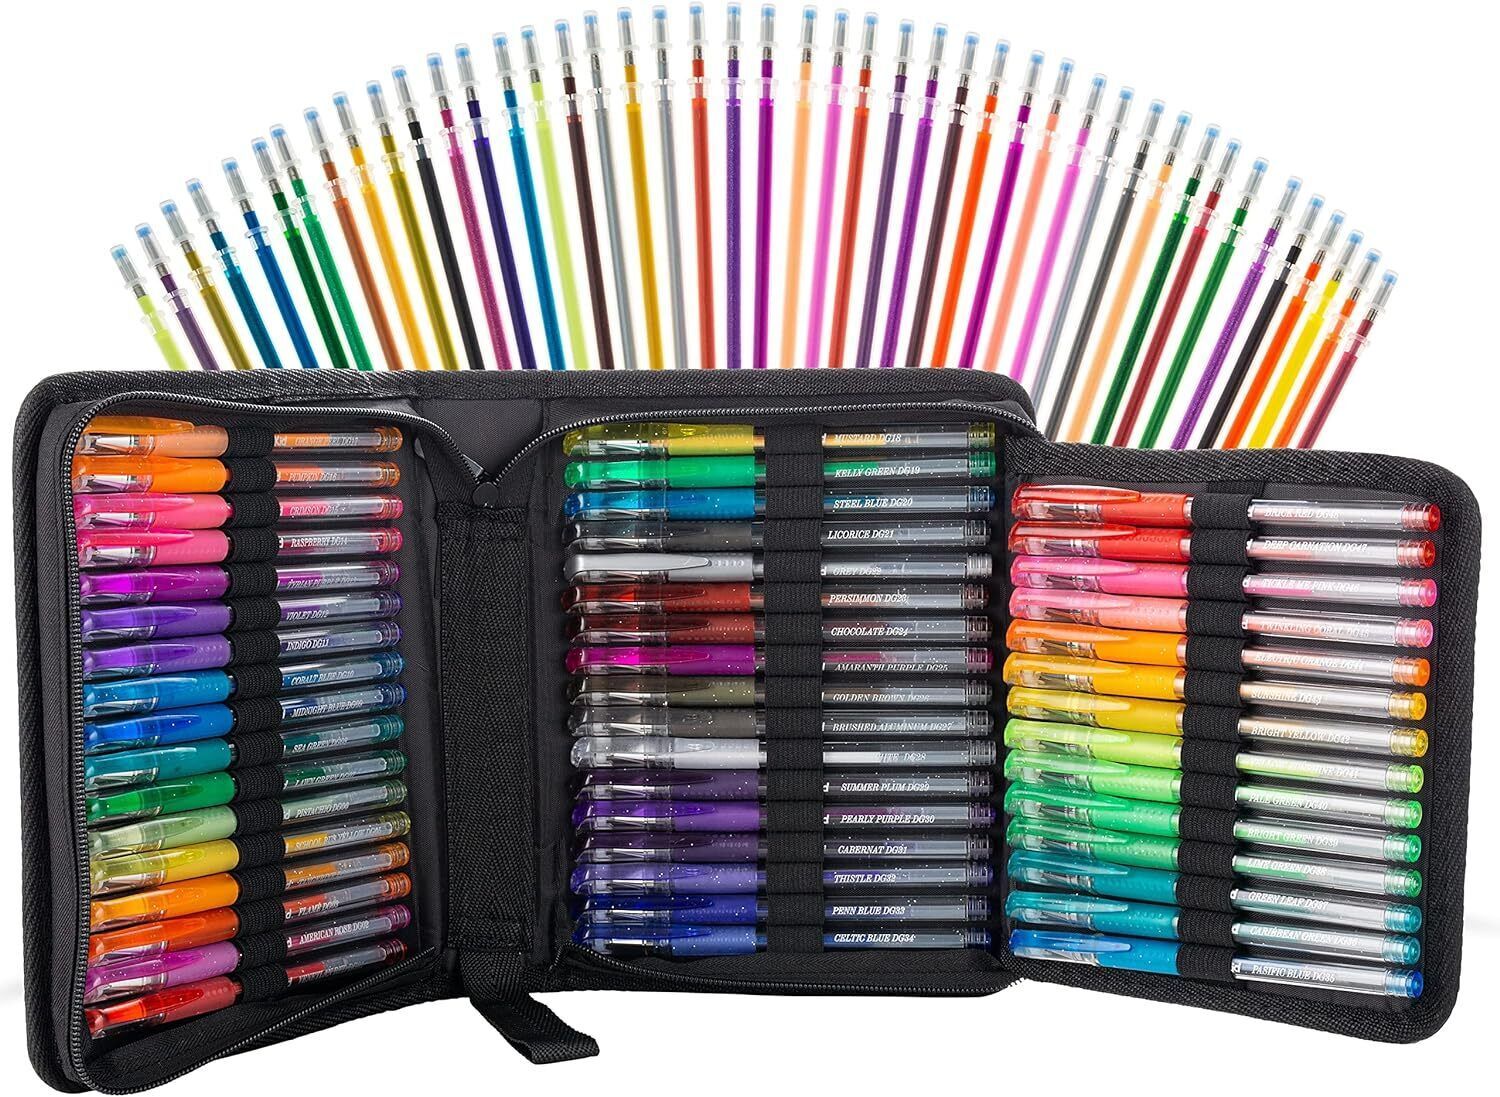 Primary image for 96 Color Artist Glitter Gel Pen Set, includes 48 unique Glitter Gel Pens, plus